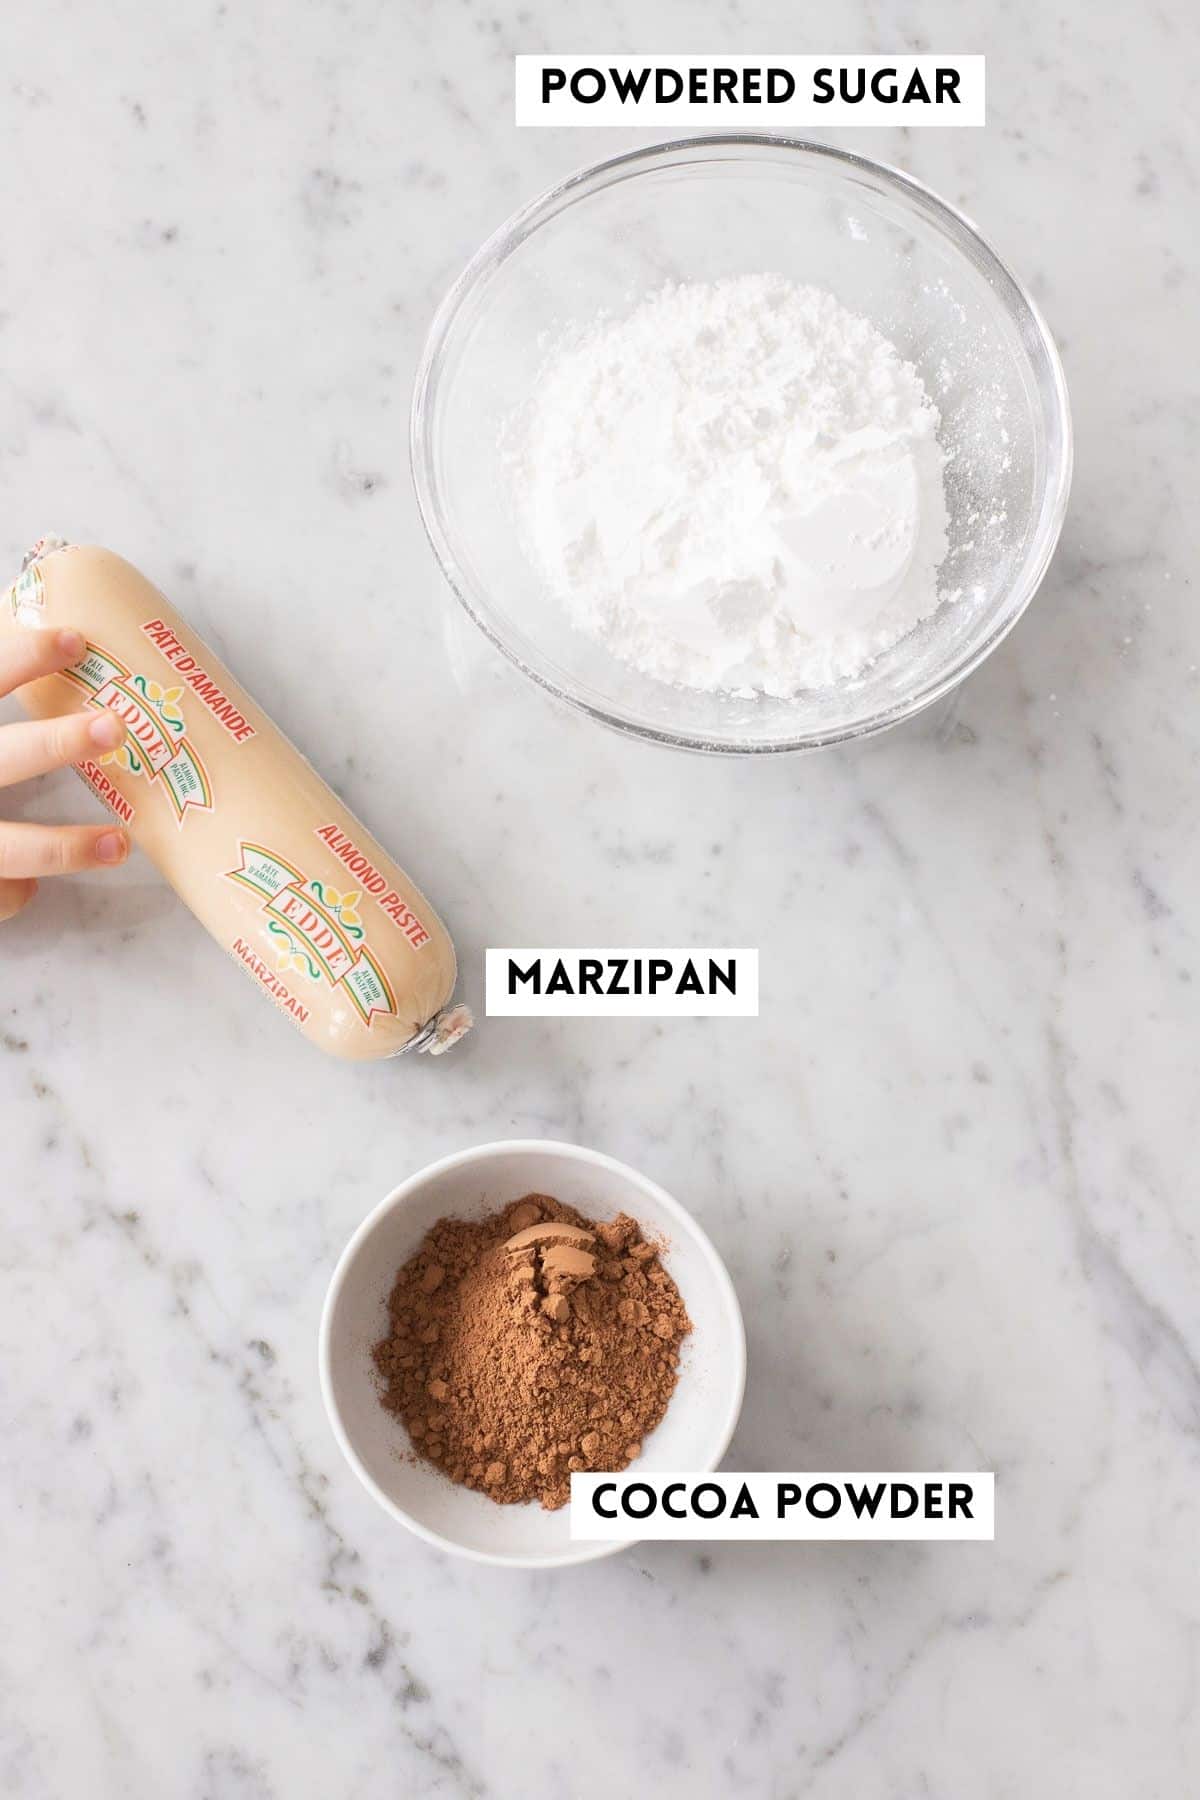 Ingredients for making Marzipankartoffeln